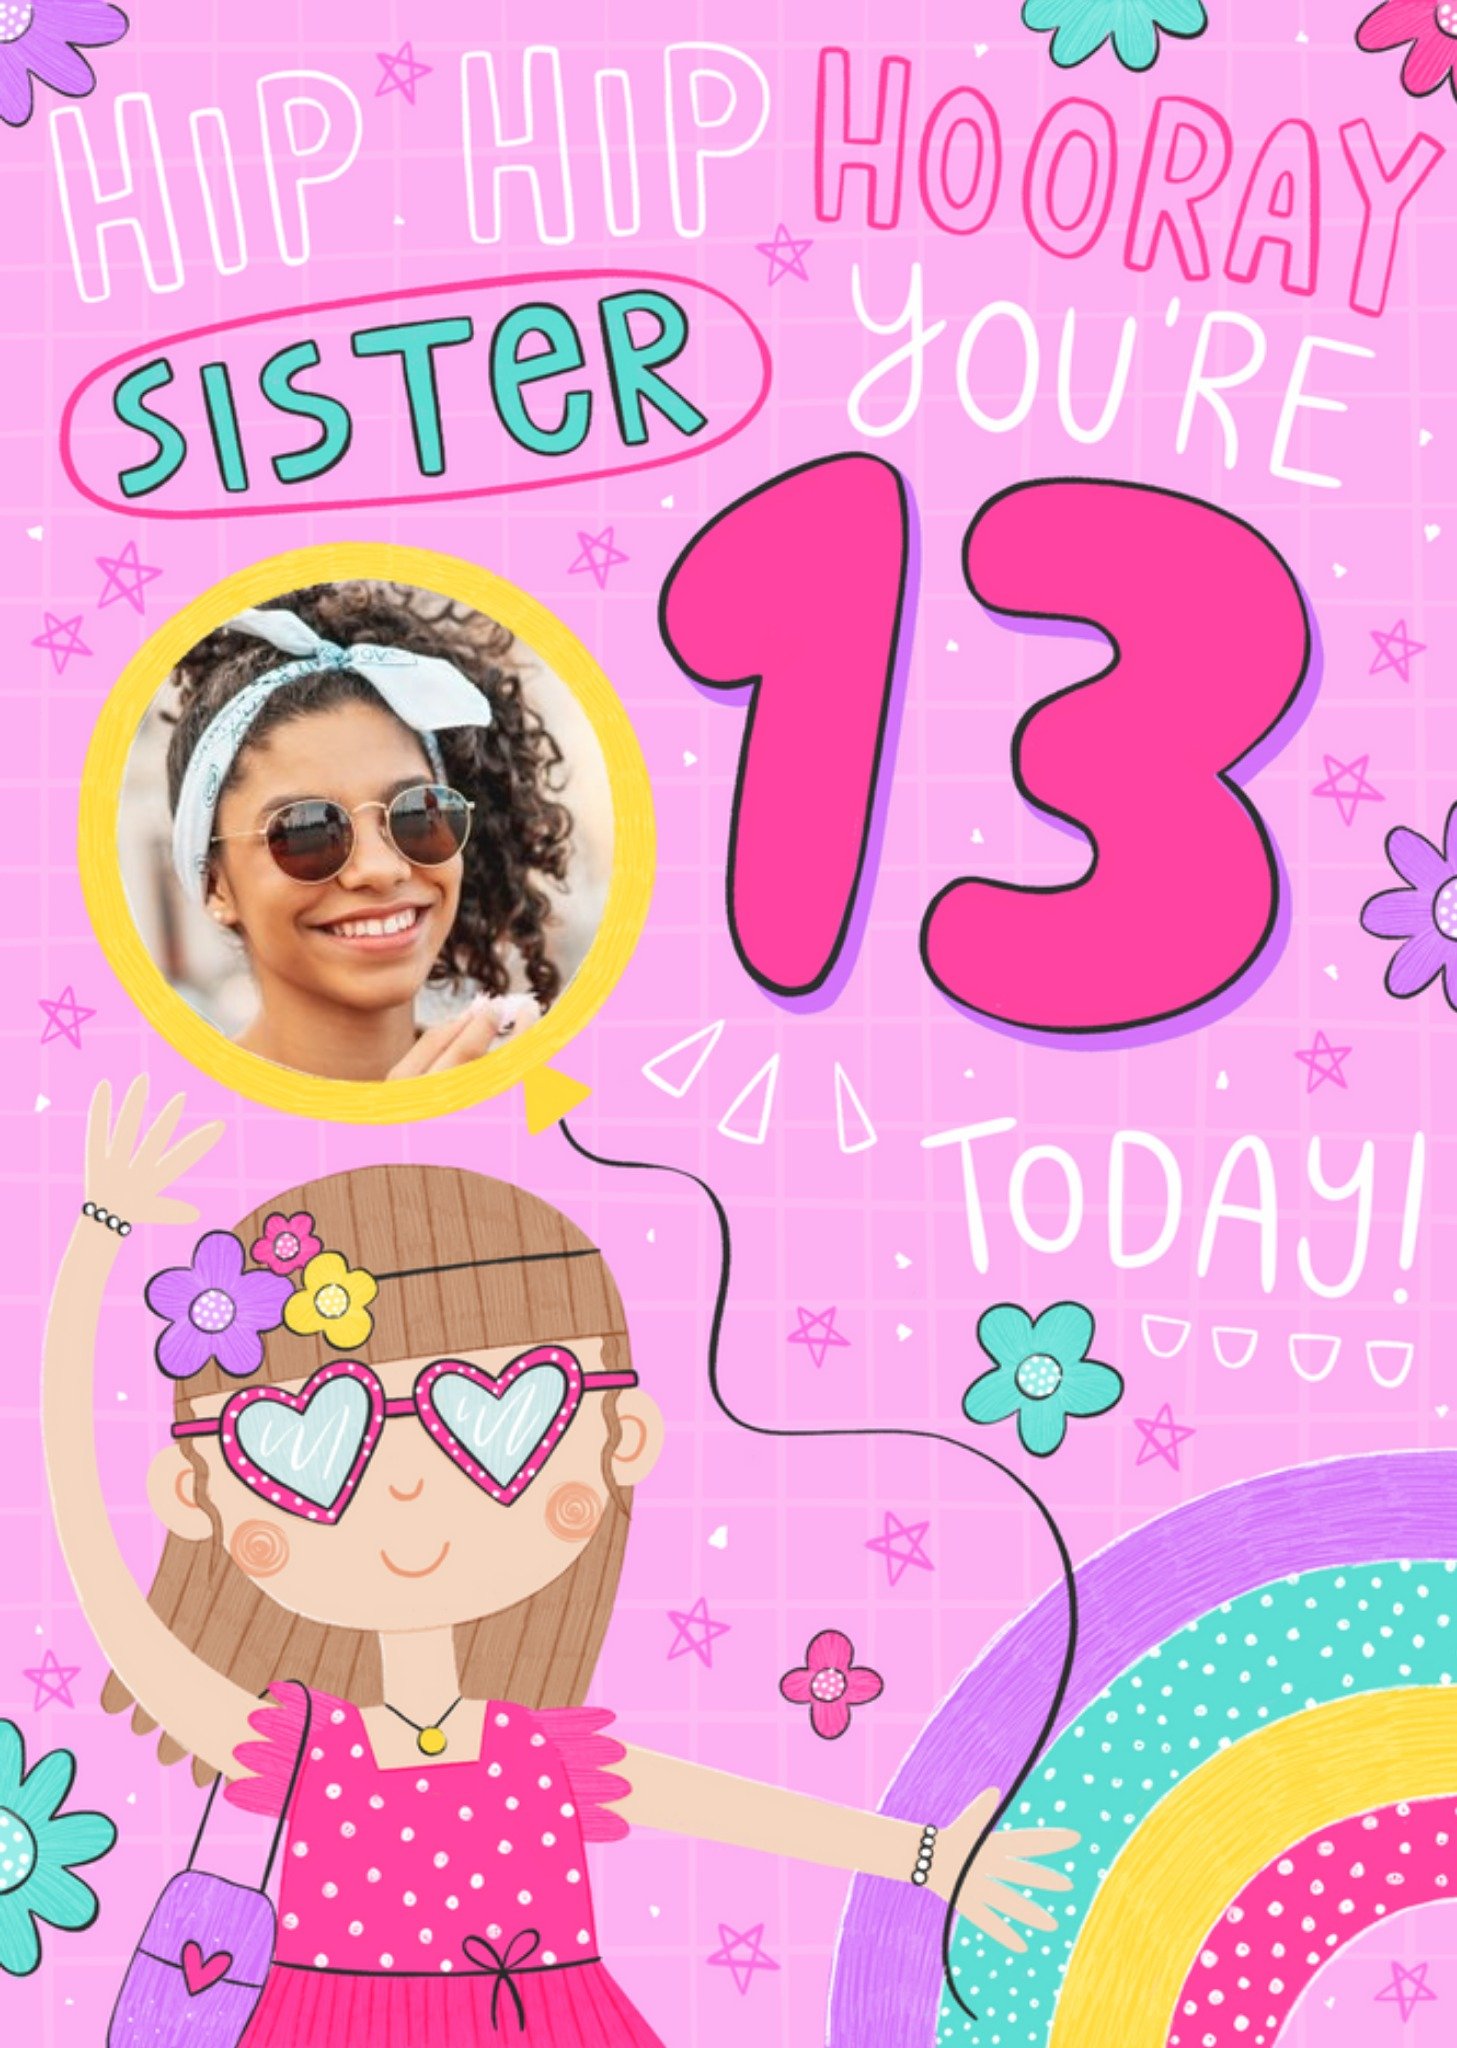 Moonpig Fun Illustration Hip Hip Hooray Sister Youre 13 Today Birthday Card Ecard